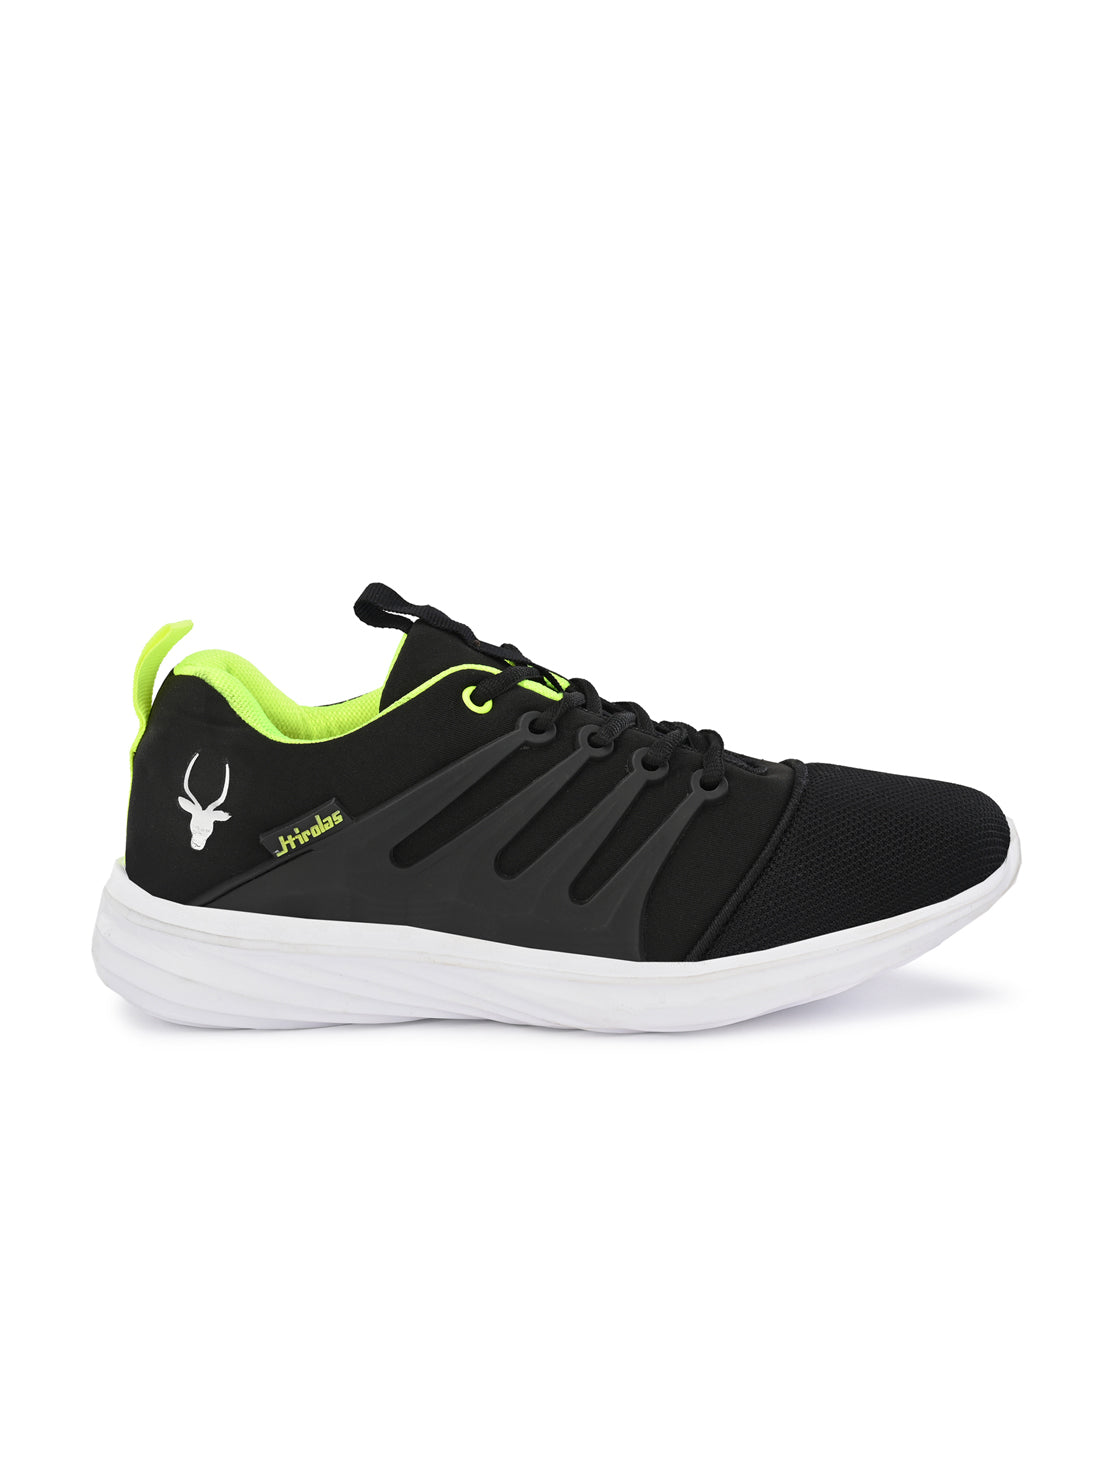 Hirolas® Men's Black Mesh Running/Walking/Gym Lace Up Sneaker Sport Shoes (HRL2004BLG)